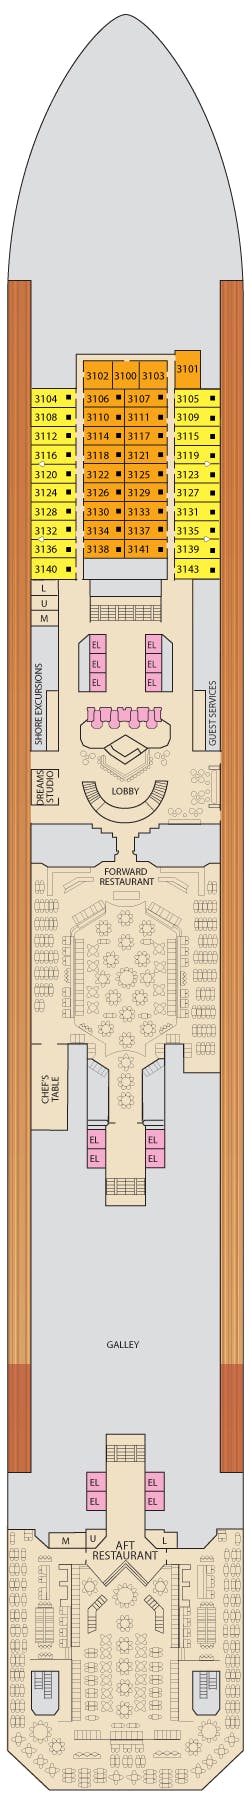 Lobby - Deck 3